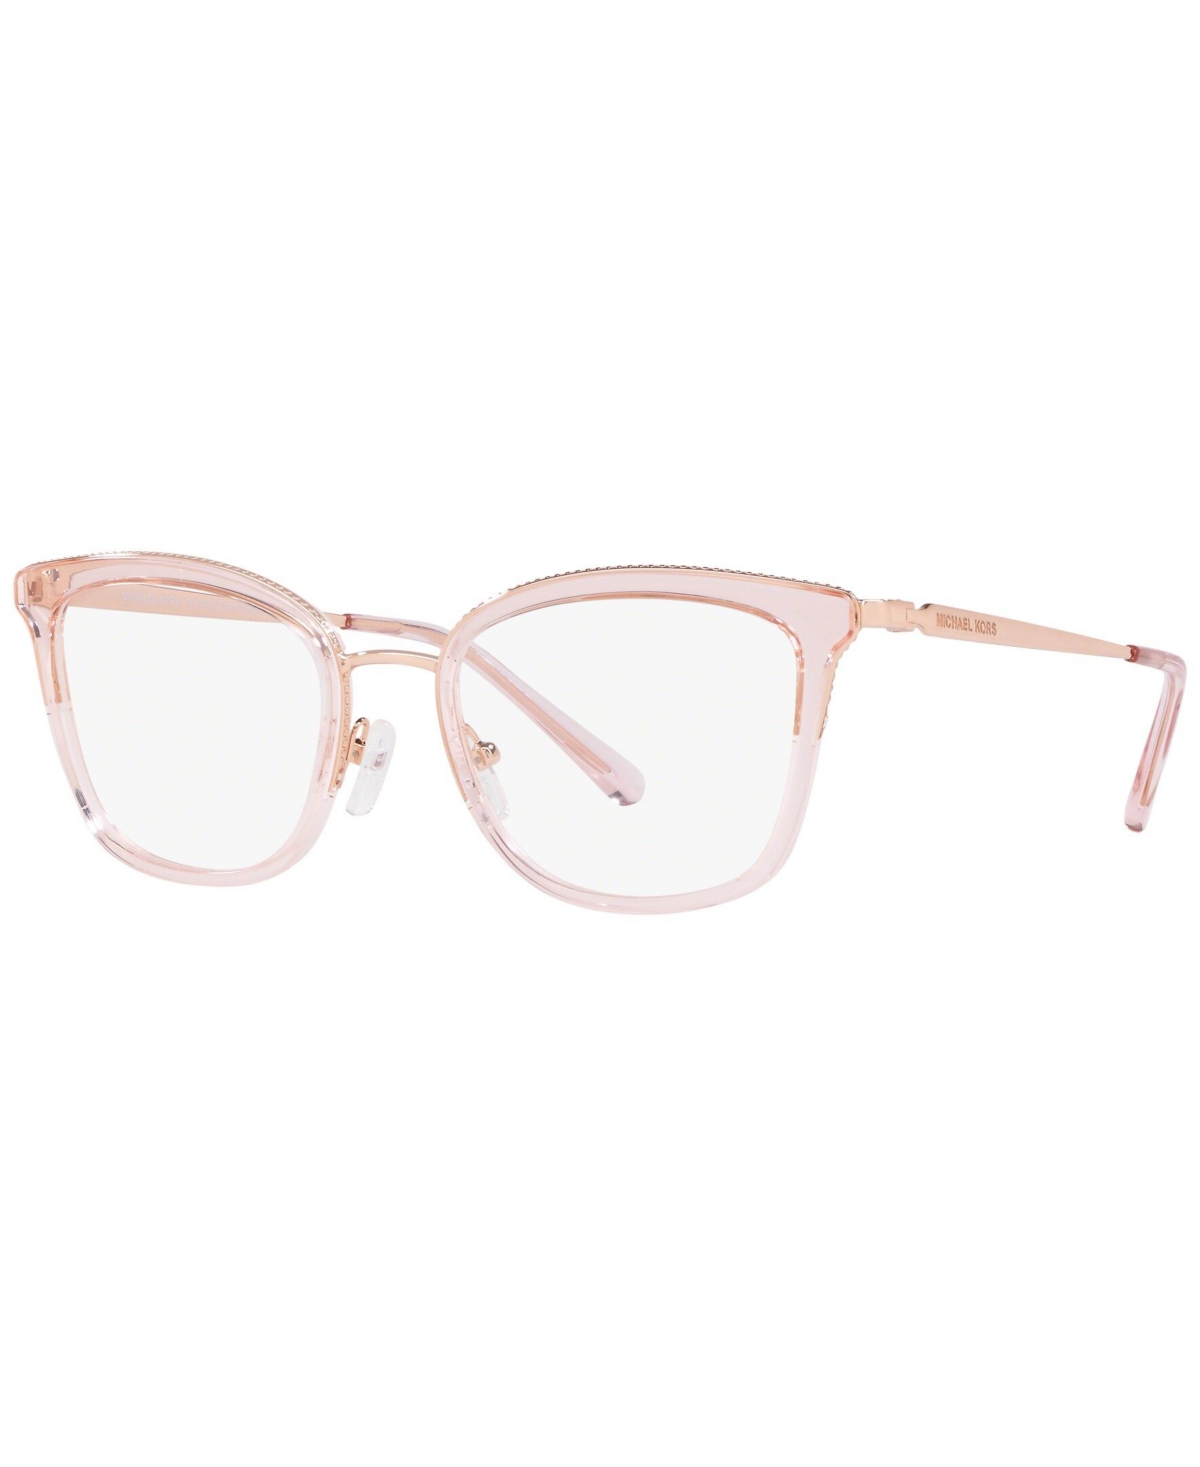 MK3032 Women's Square Eyeglasses - Pink